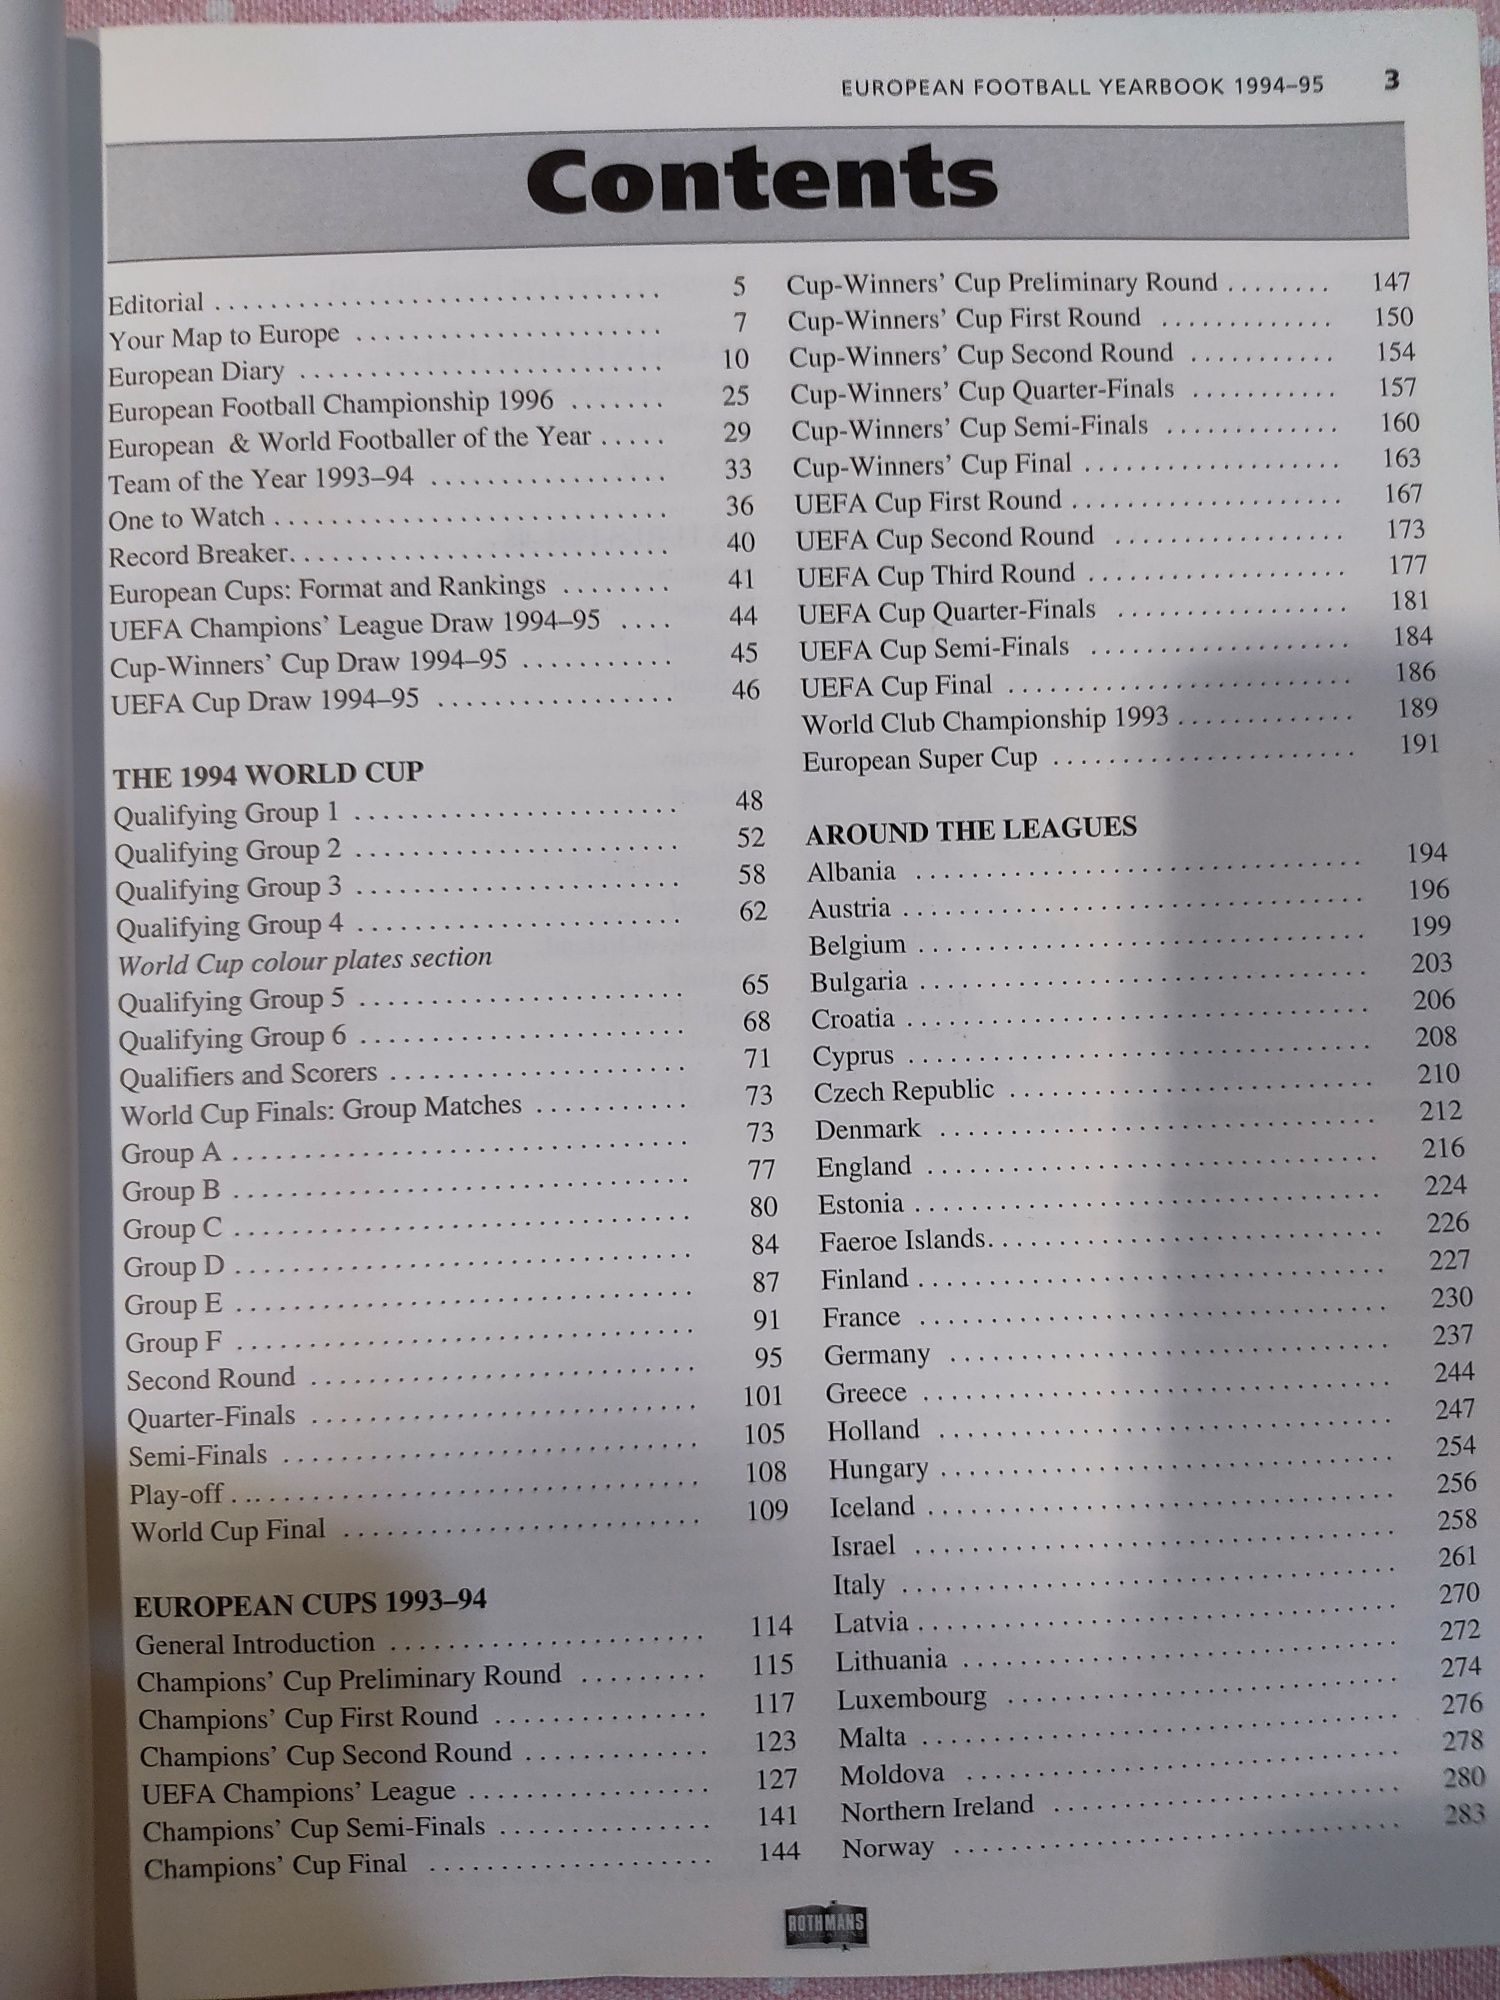 Livro Yearbook of European Football 1994/95